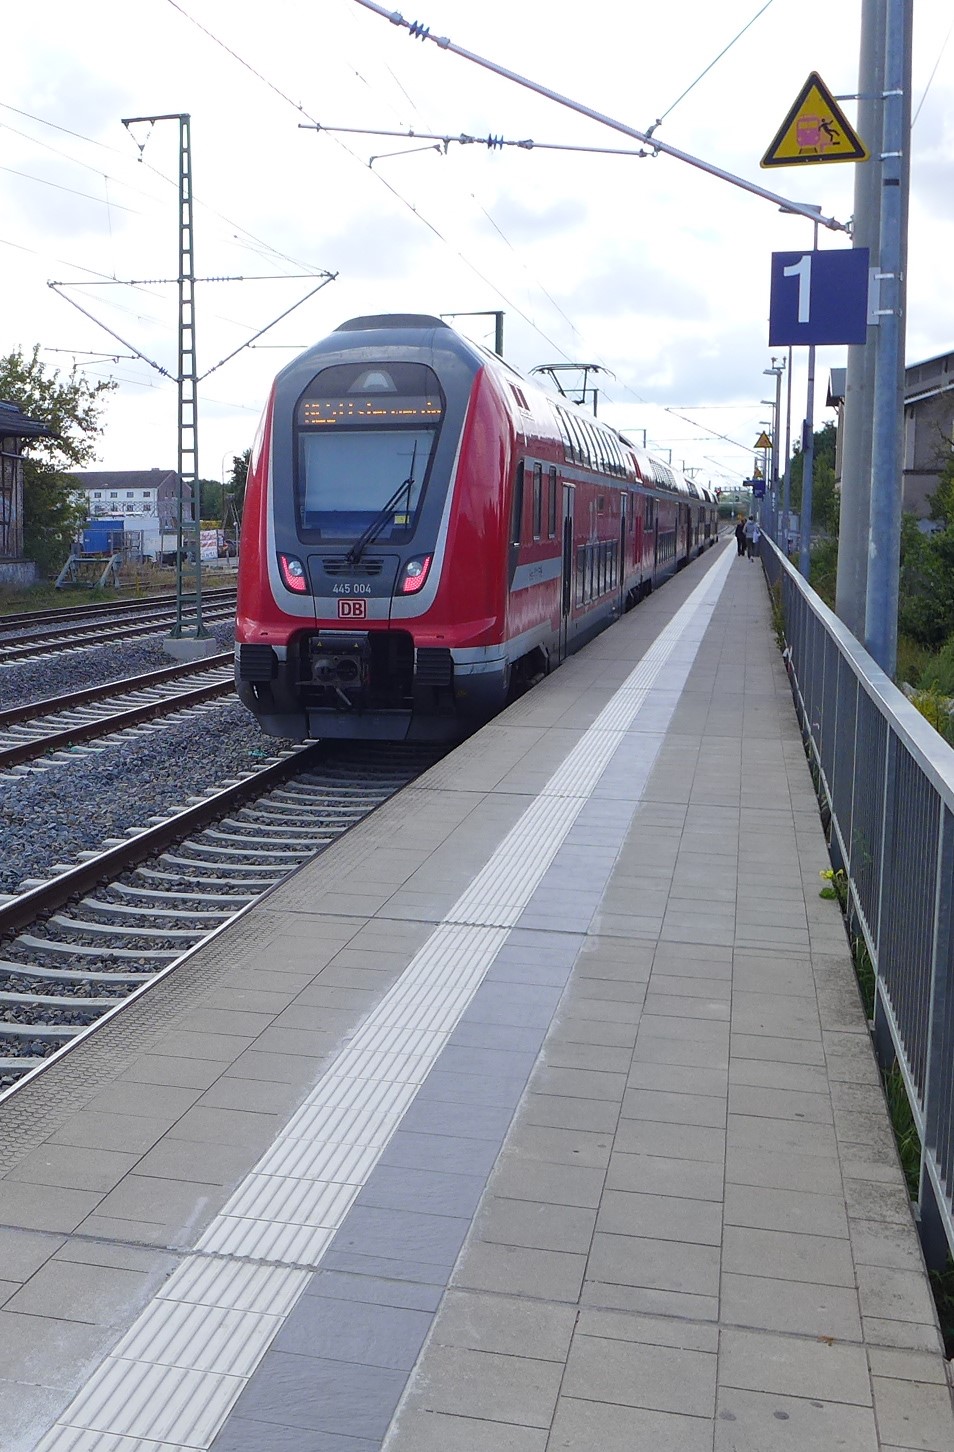 Bahnhof Gransee termingerecht modernisiert Deutsche Bahn AG